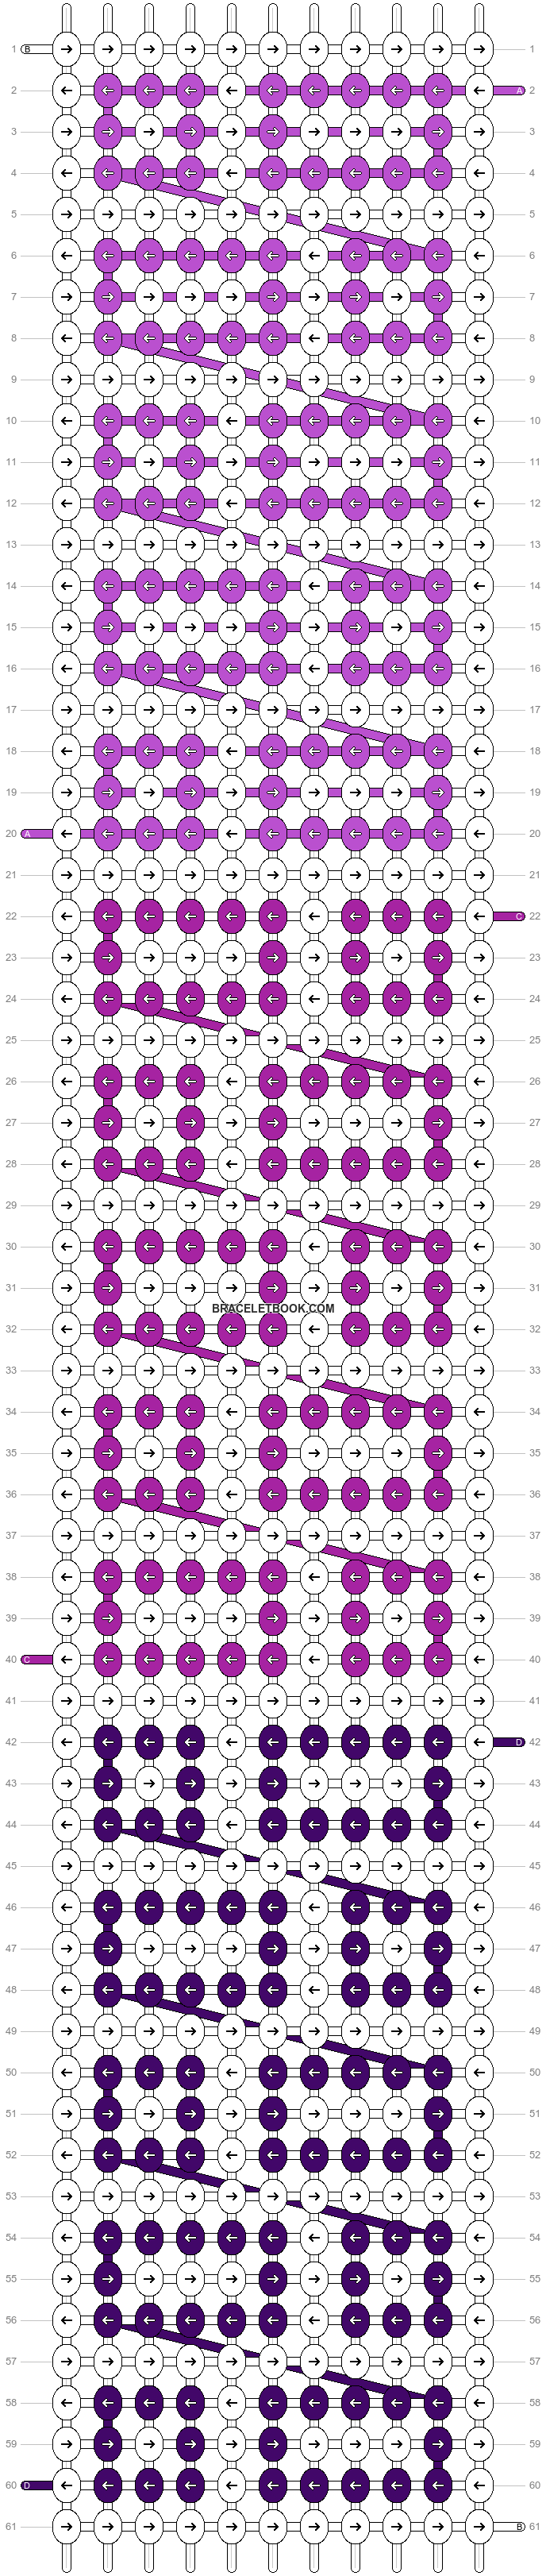 Alpha pattern #54067 variation #91292 pattern